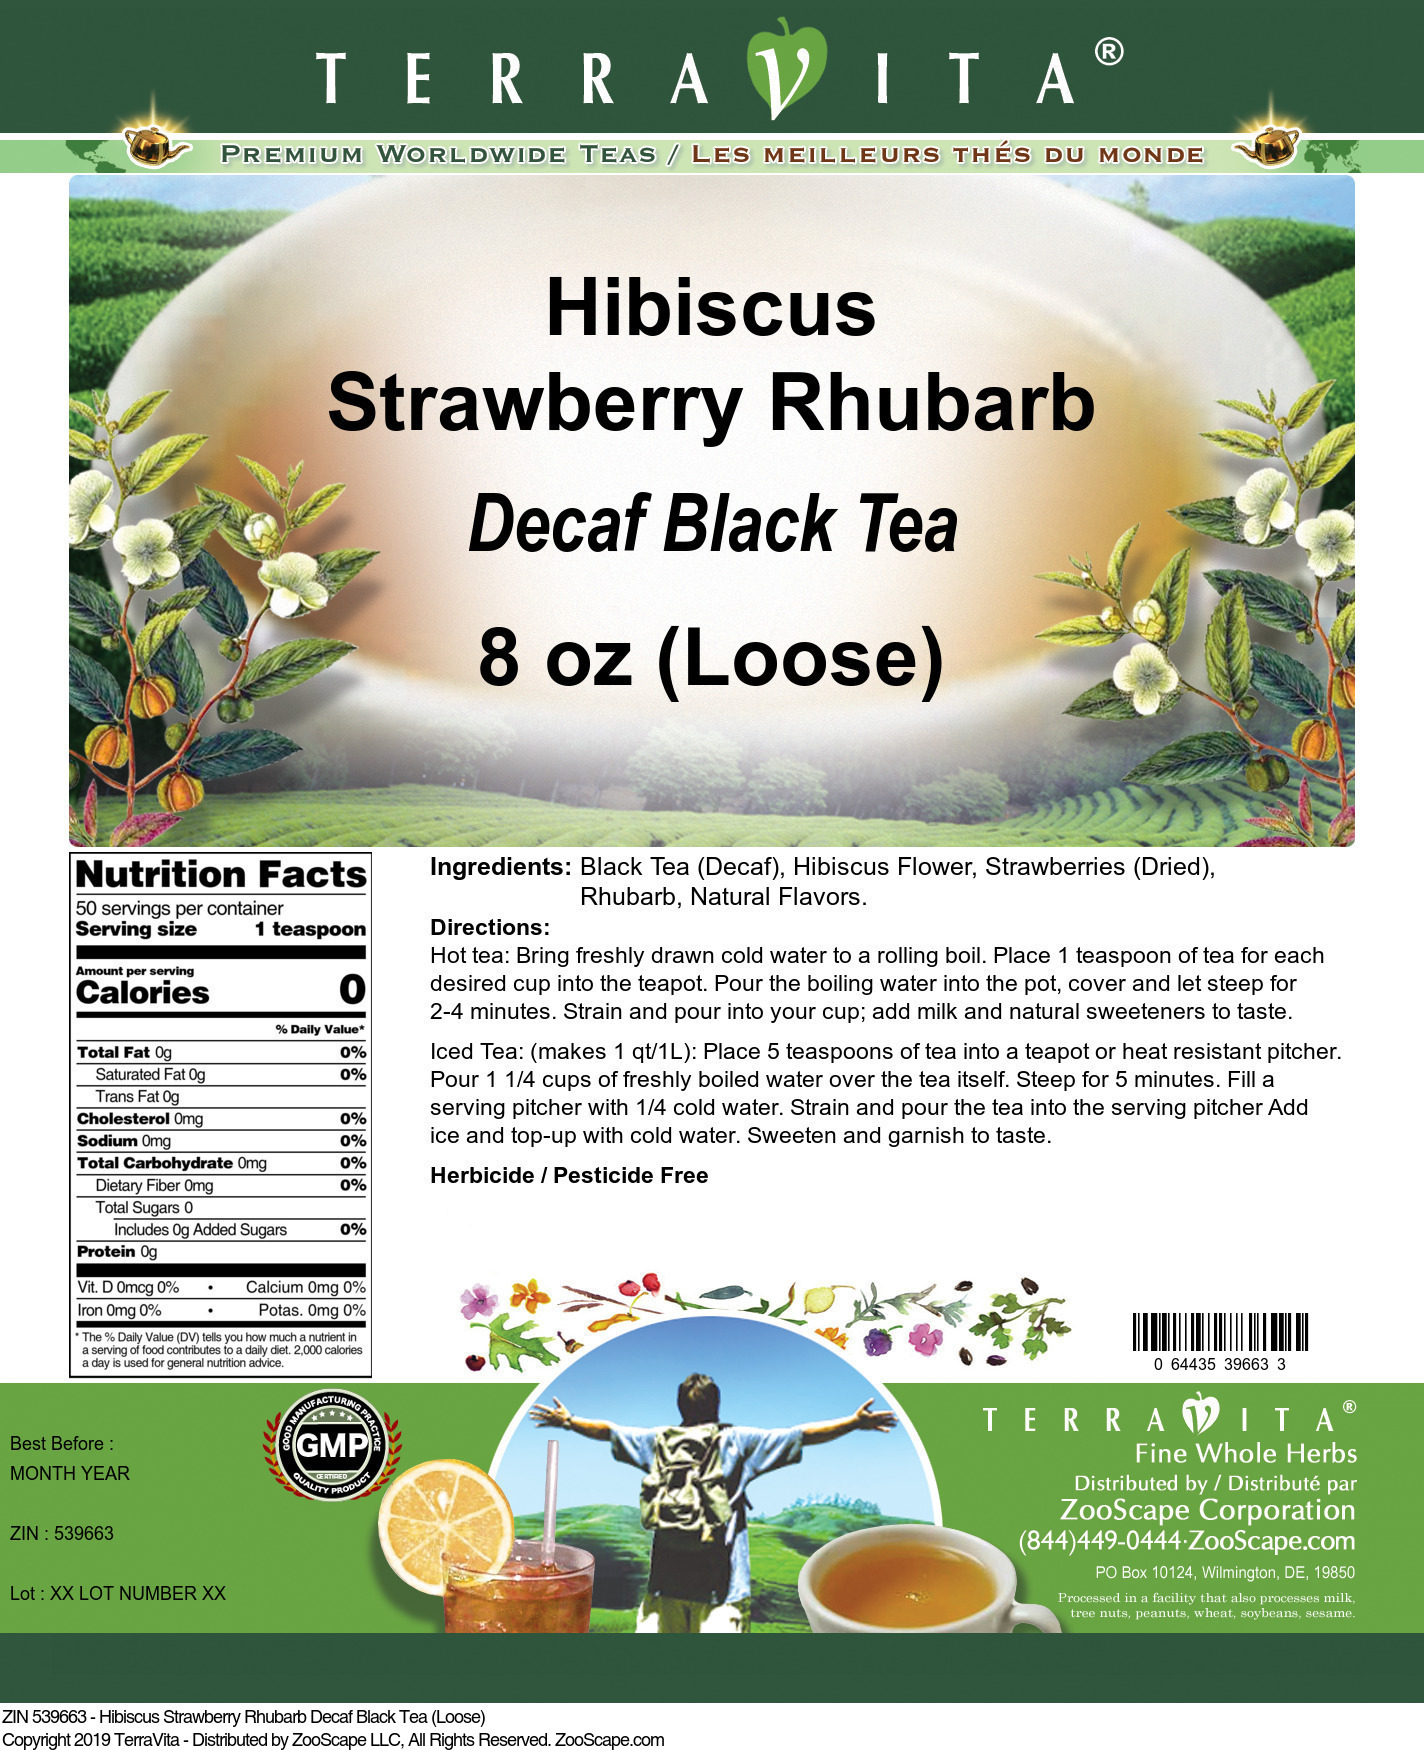 Hibiscus Strawberry Rhubarb Decaf Black Tea (Loose) - Label